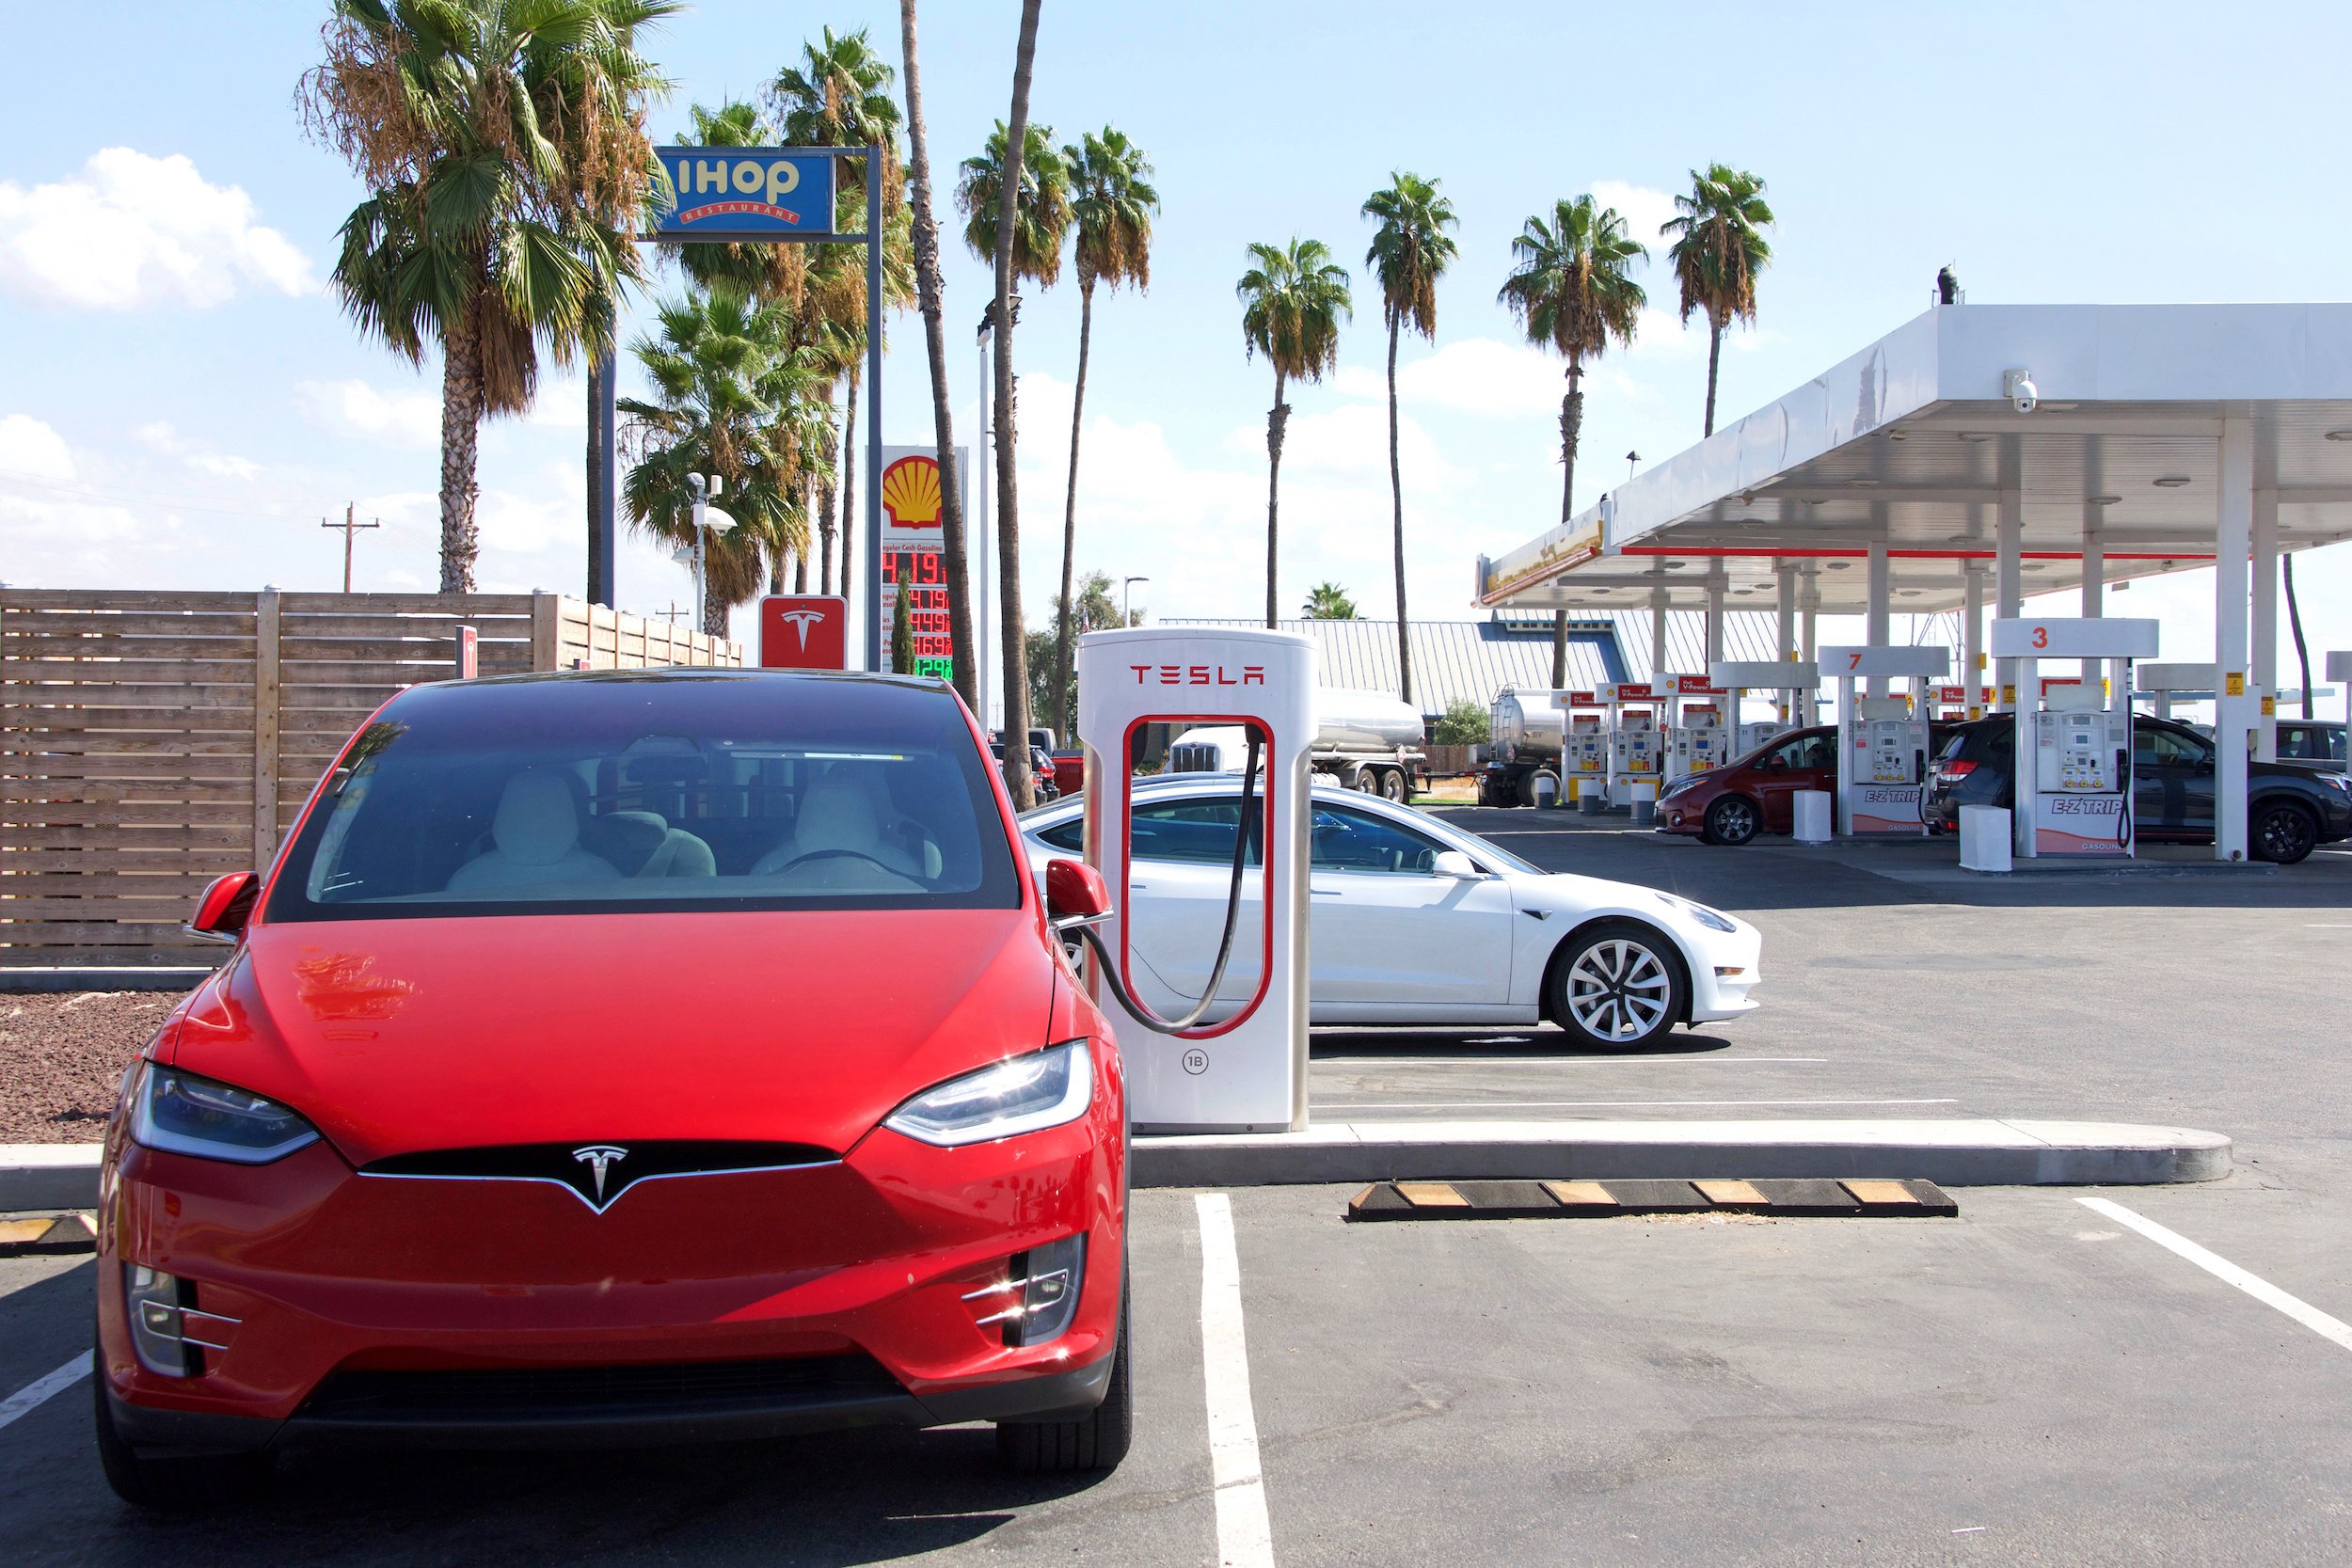 Do Teslas Have Solar Panels?